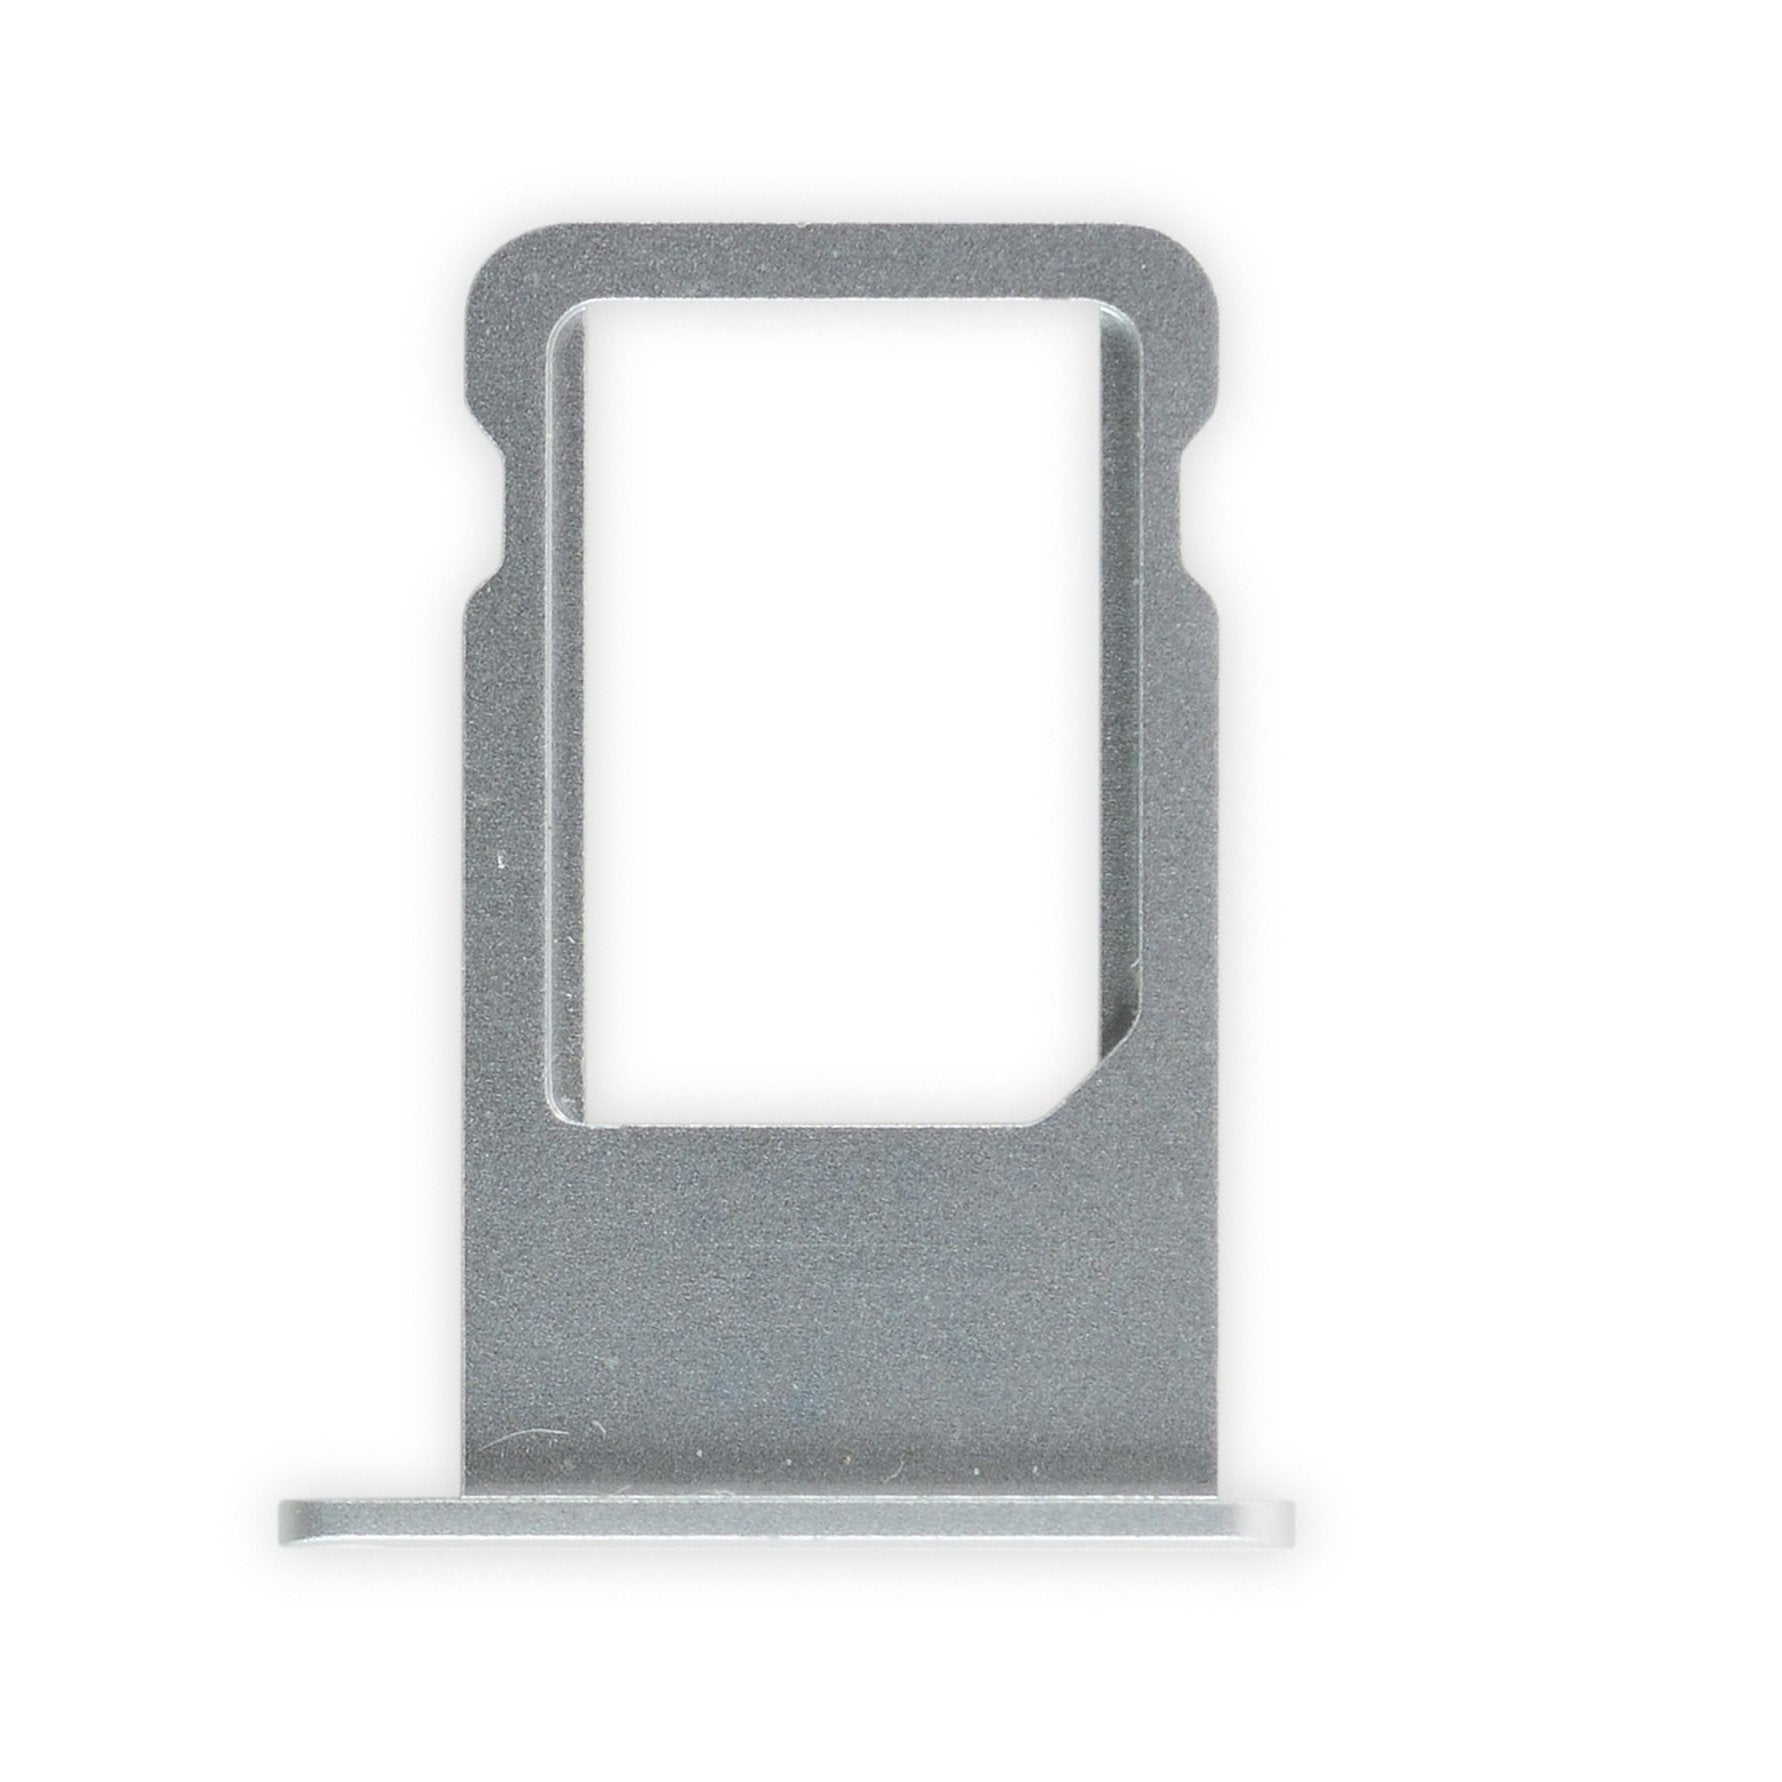 iPhone 6s Nano SIM Card Tray Silver New